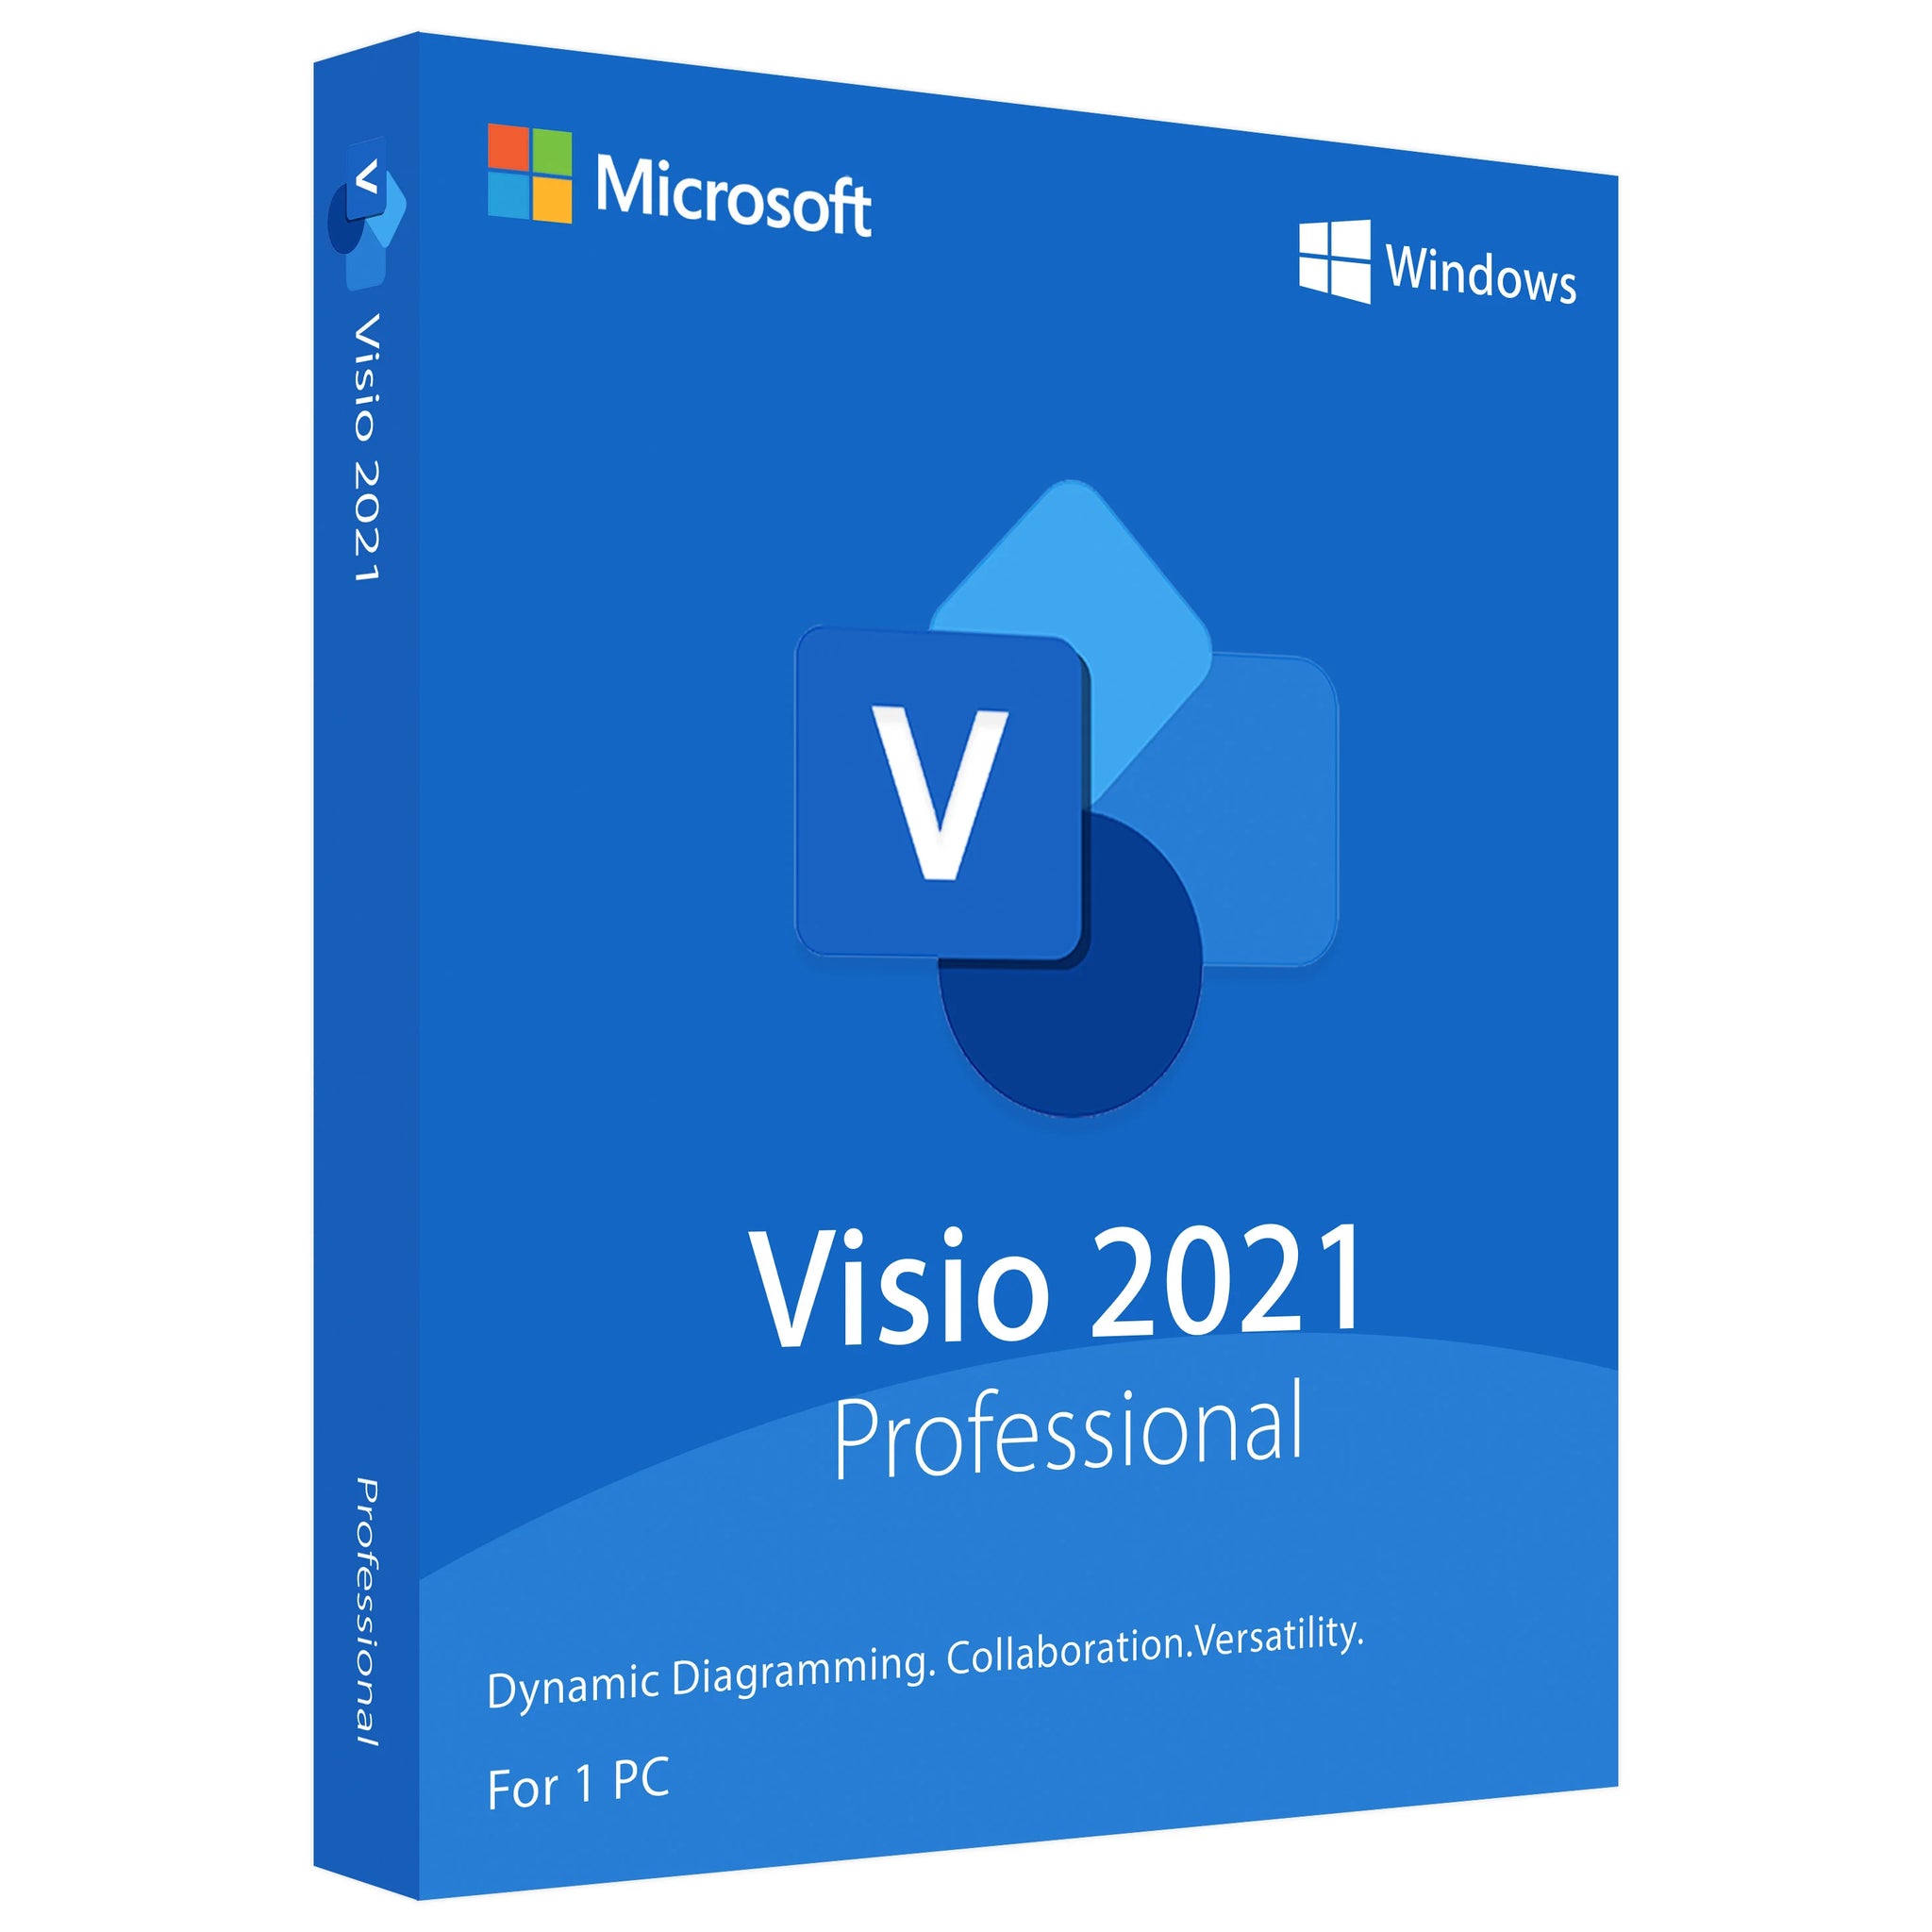 Microsoft Visio 2021 Professional - Lifetime License Key for 1 PC